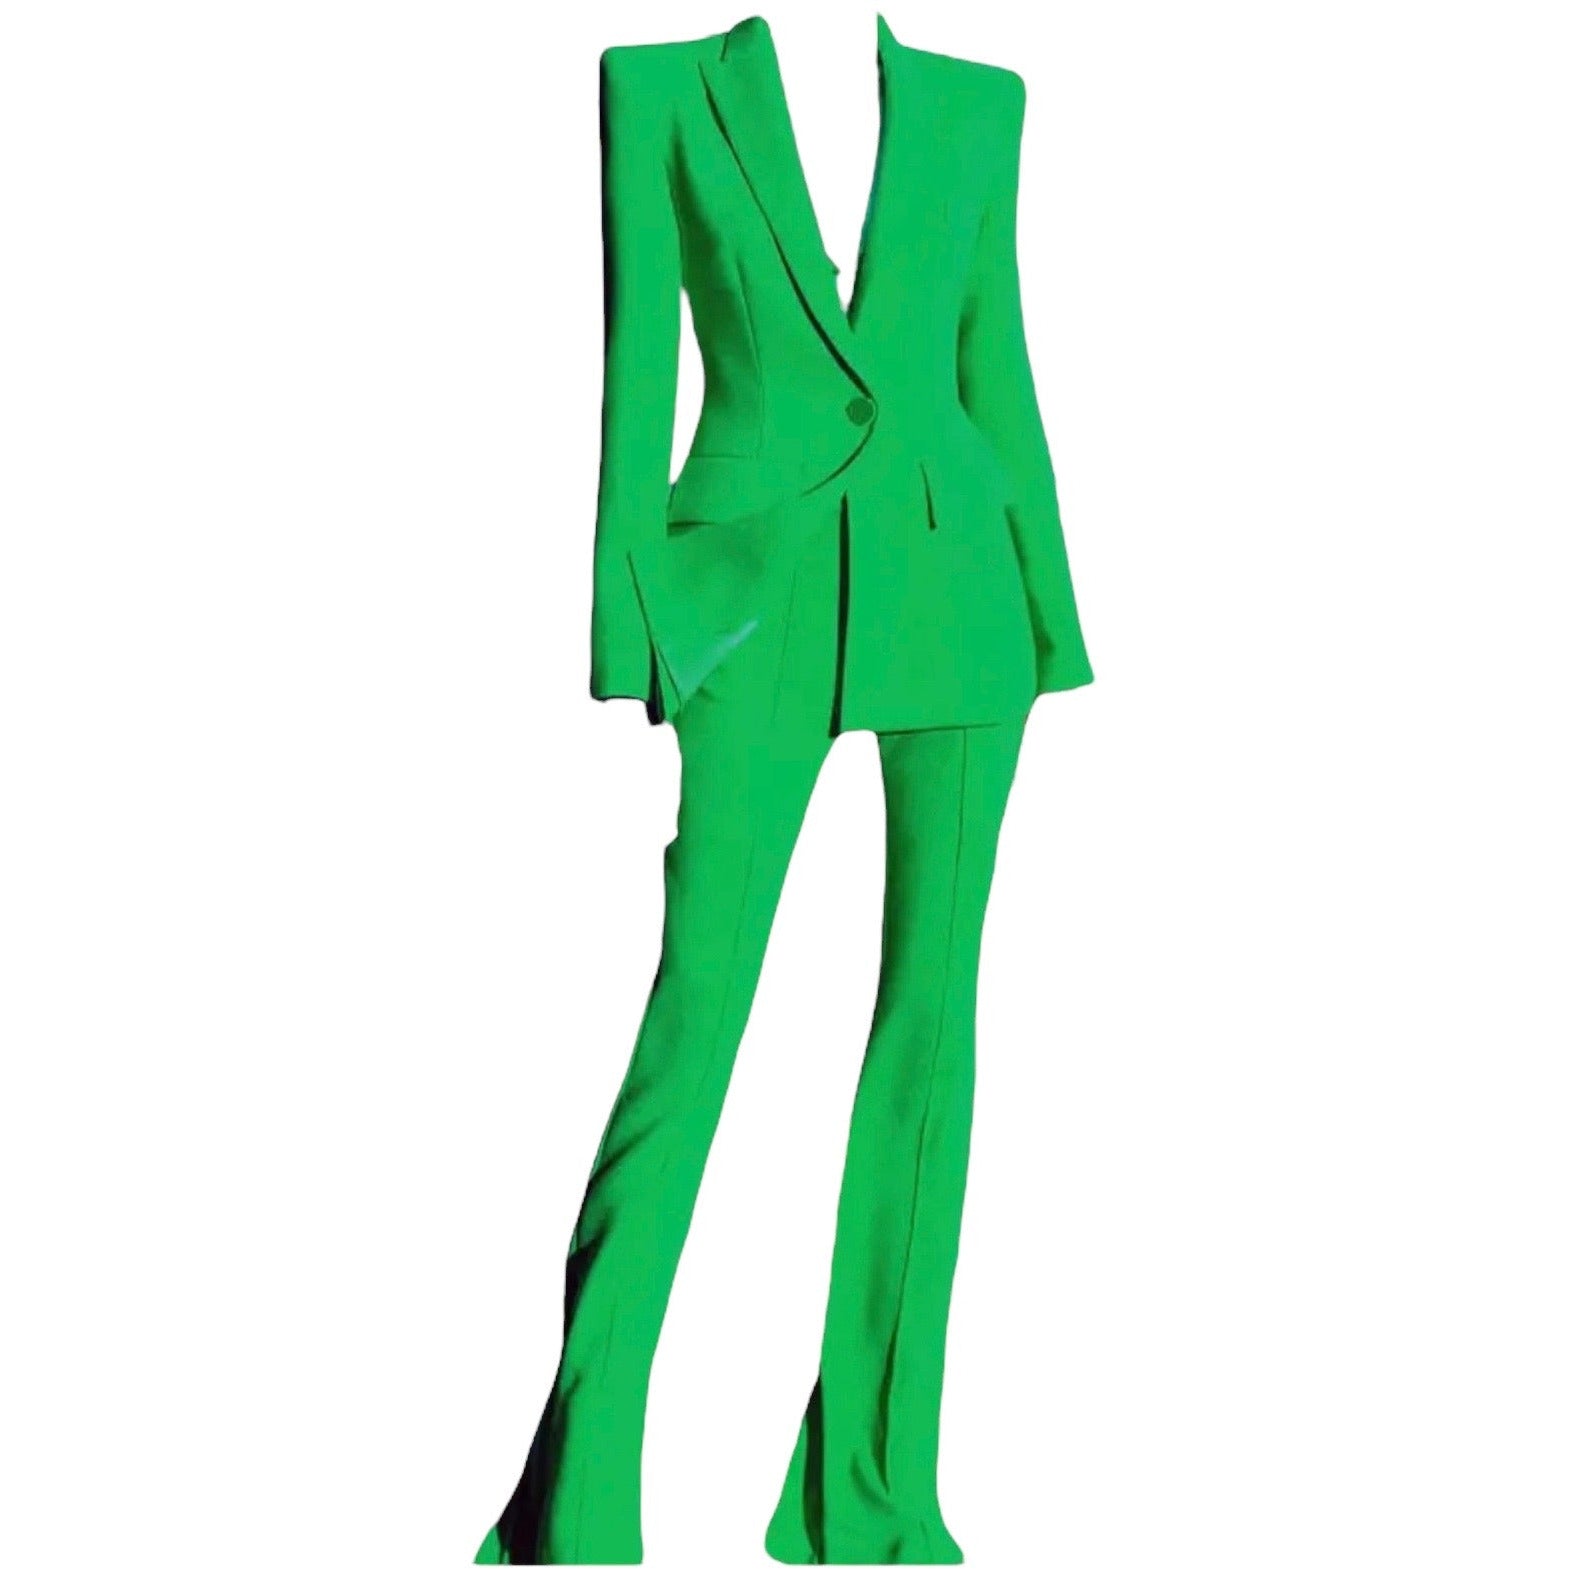 Elegant Ladies Green Trouser Suit for Wedding Guests  Cerrura Fashions